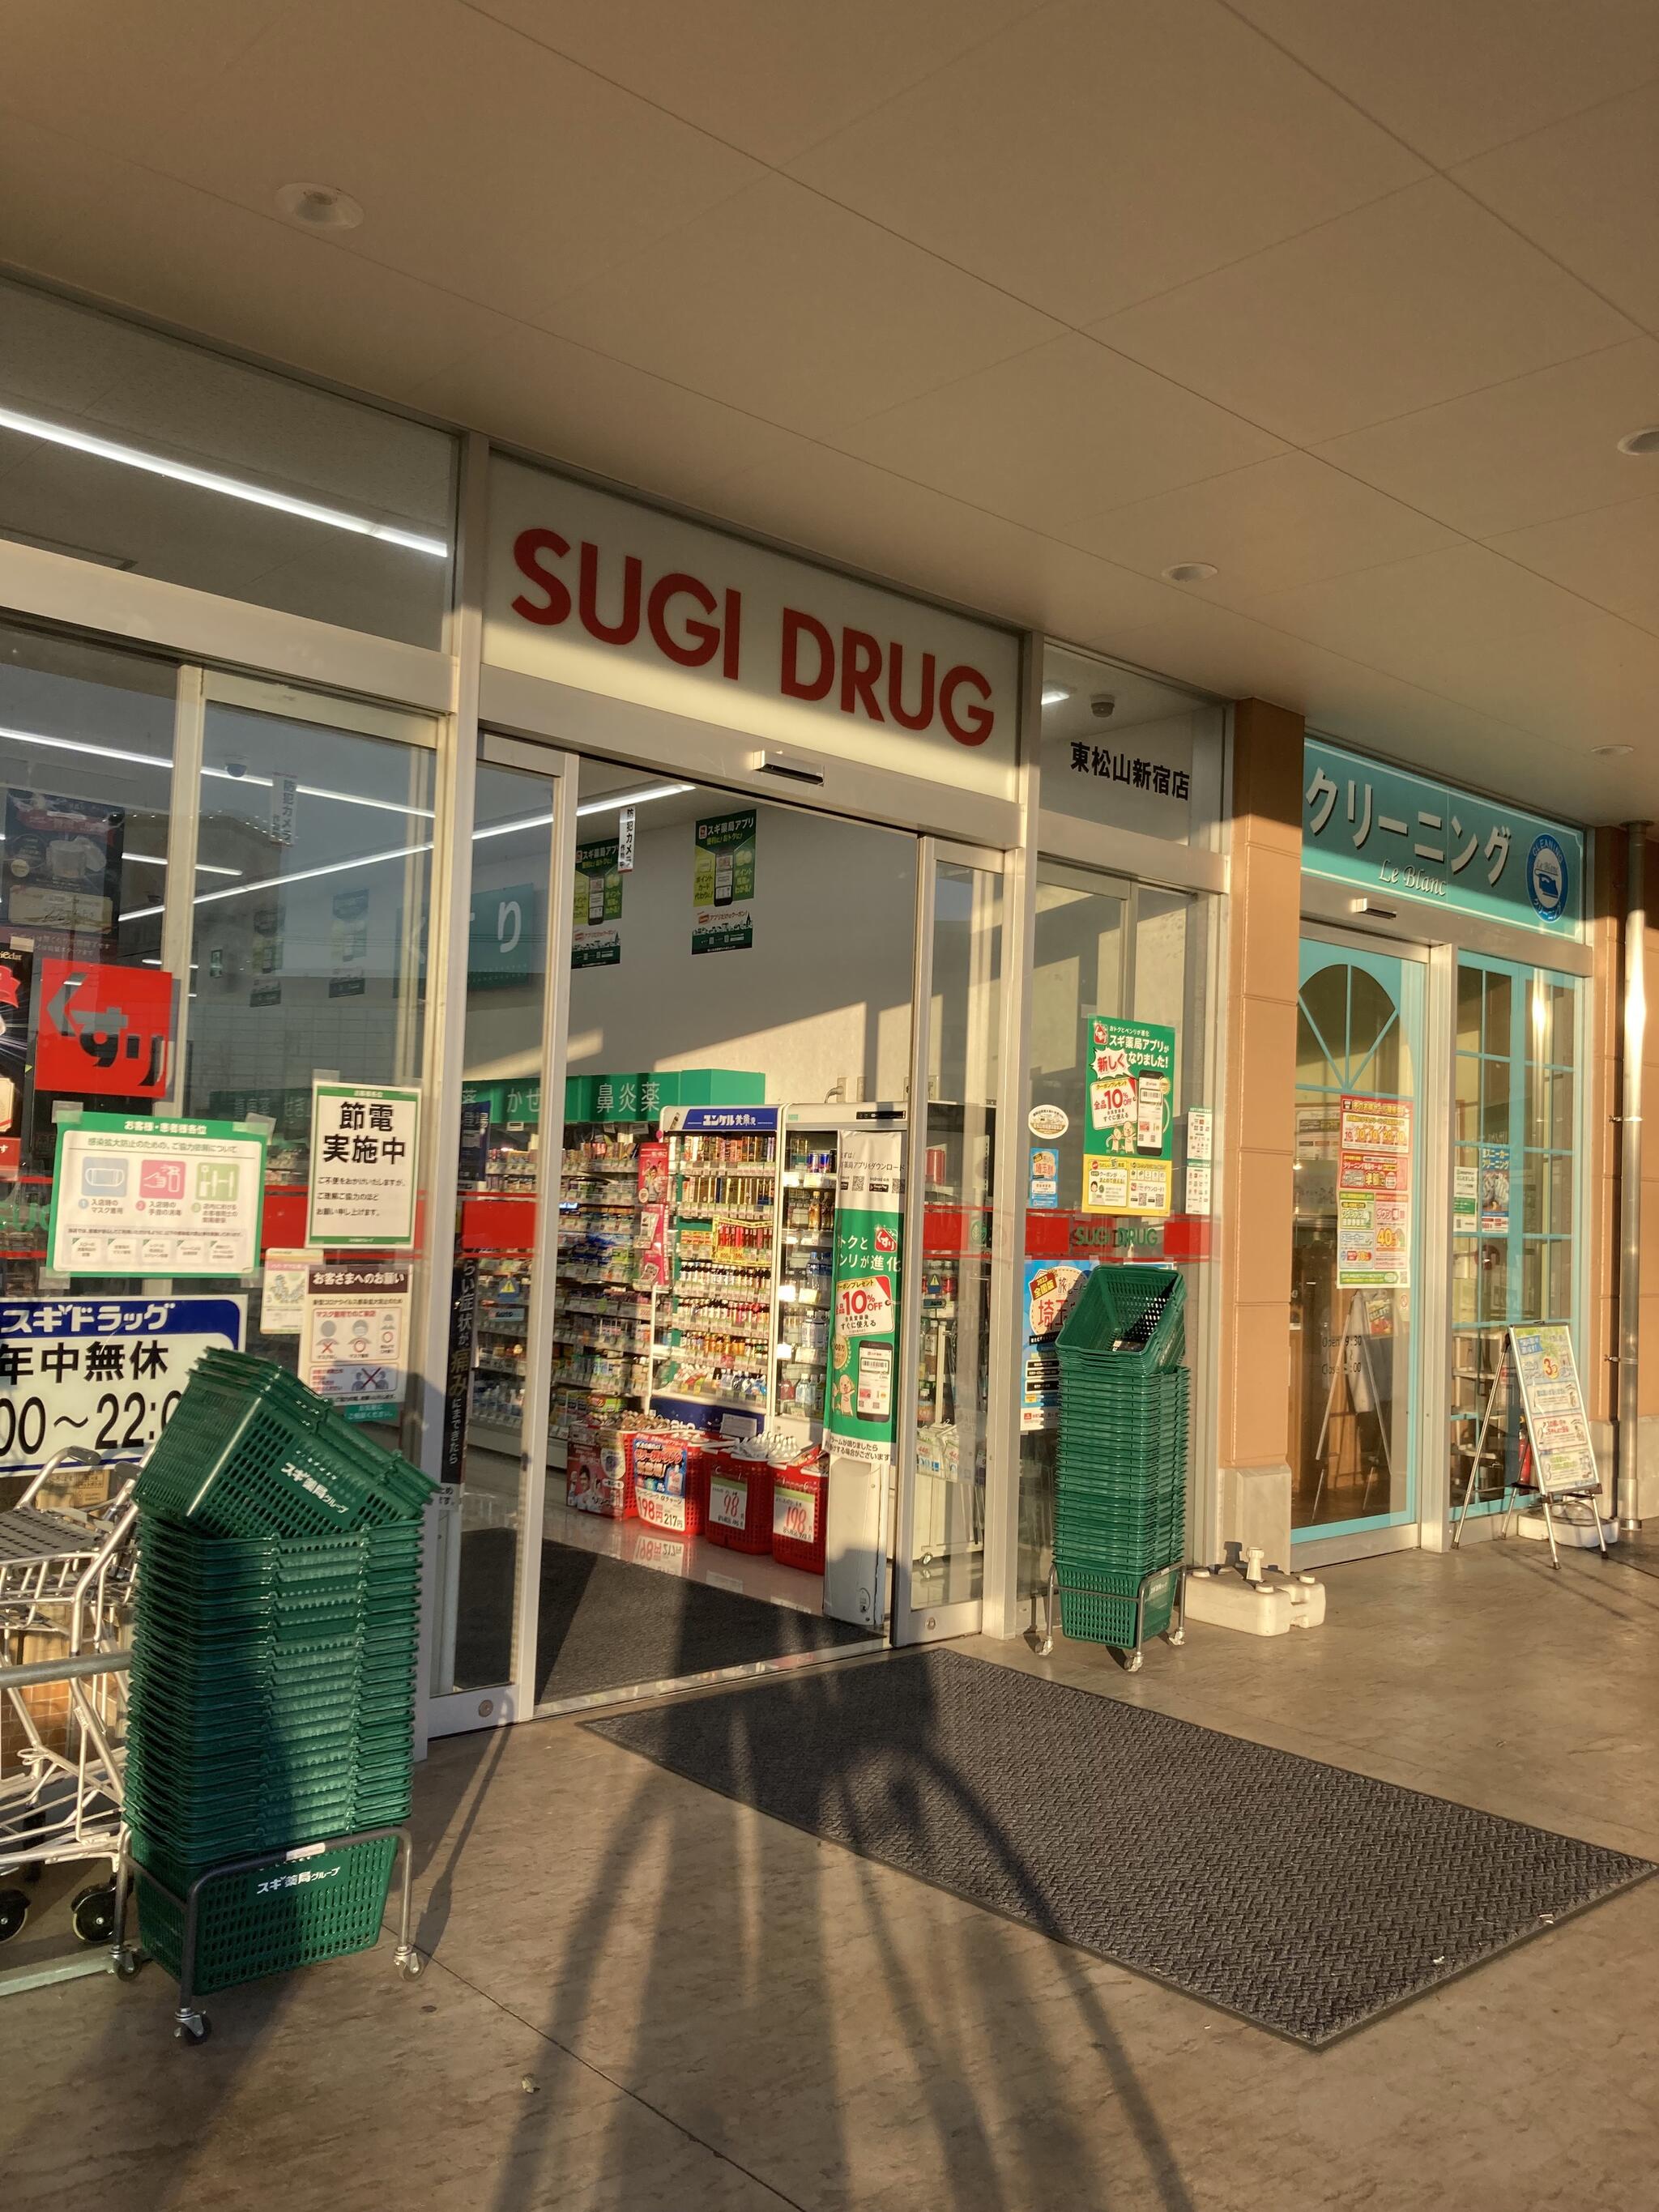 スギ薬局 東松山新宿町店の代表写真3